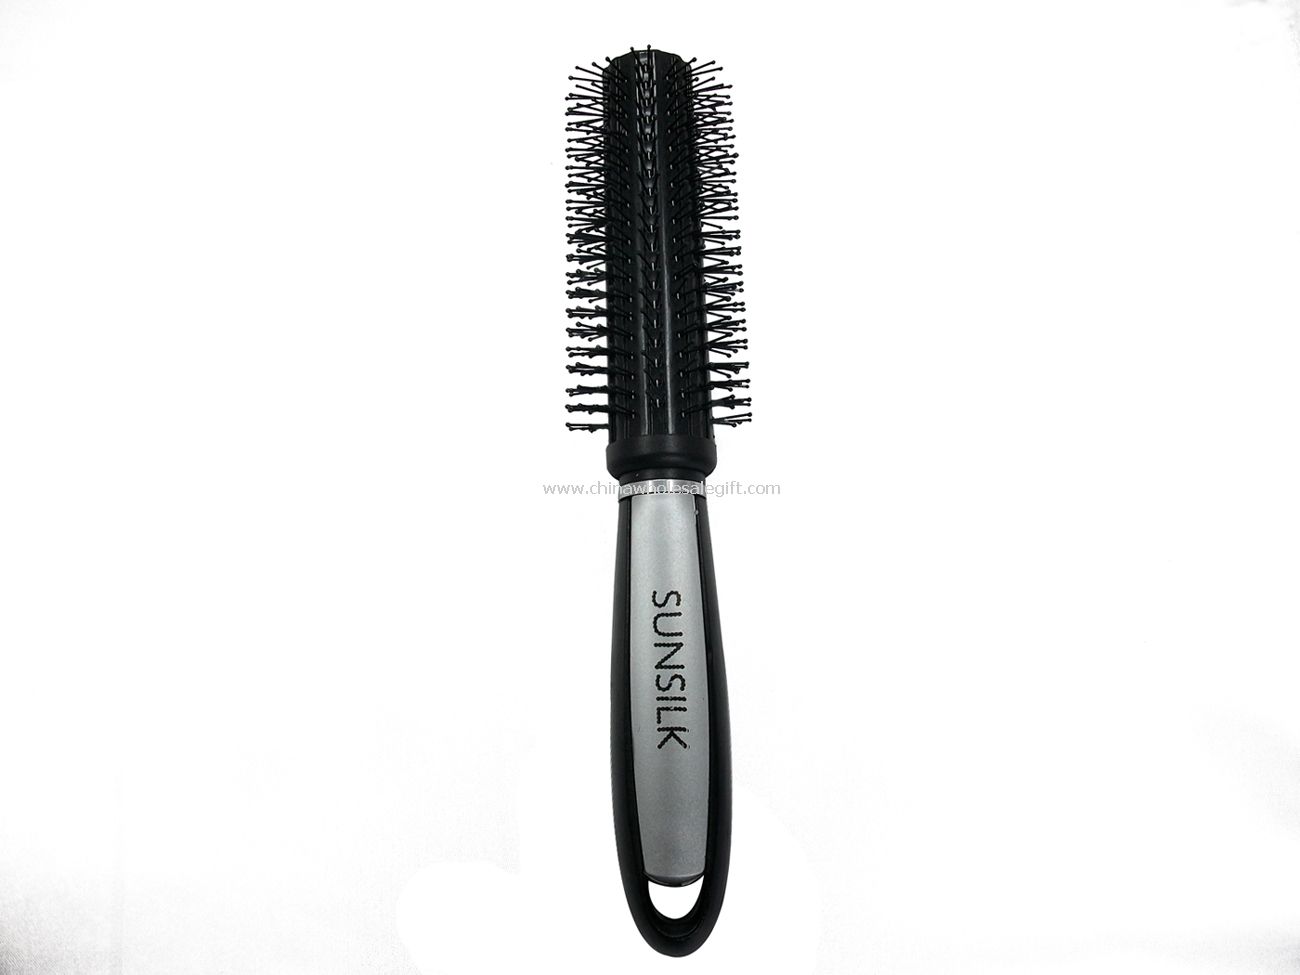 Cosmetic comb